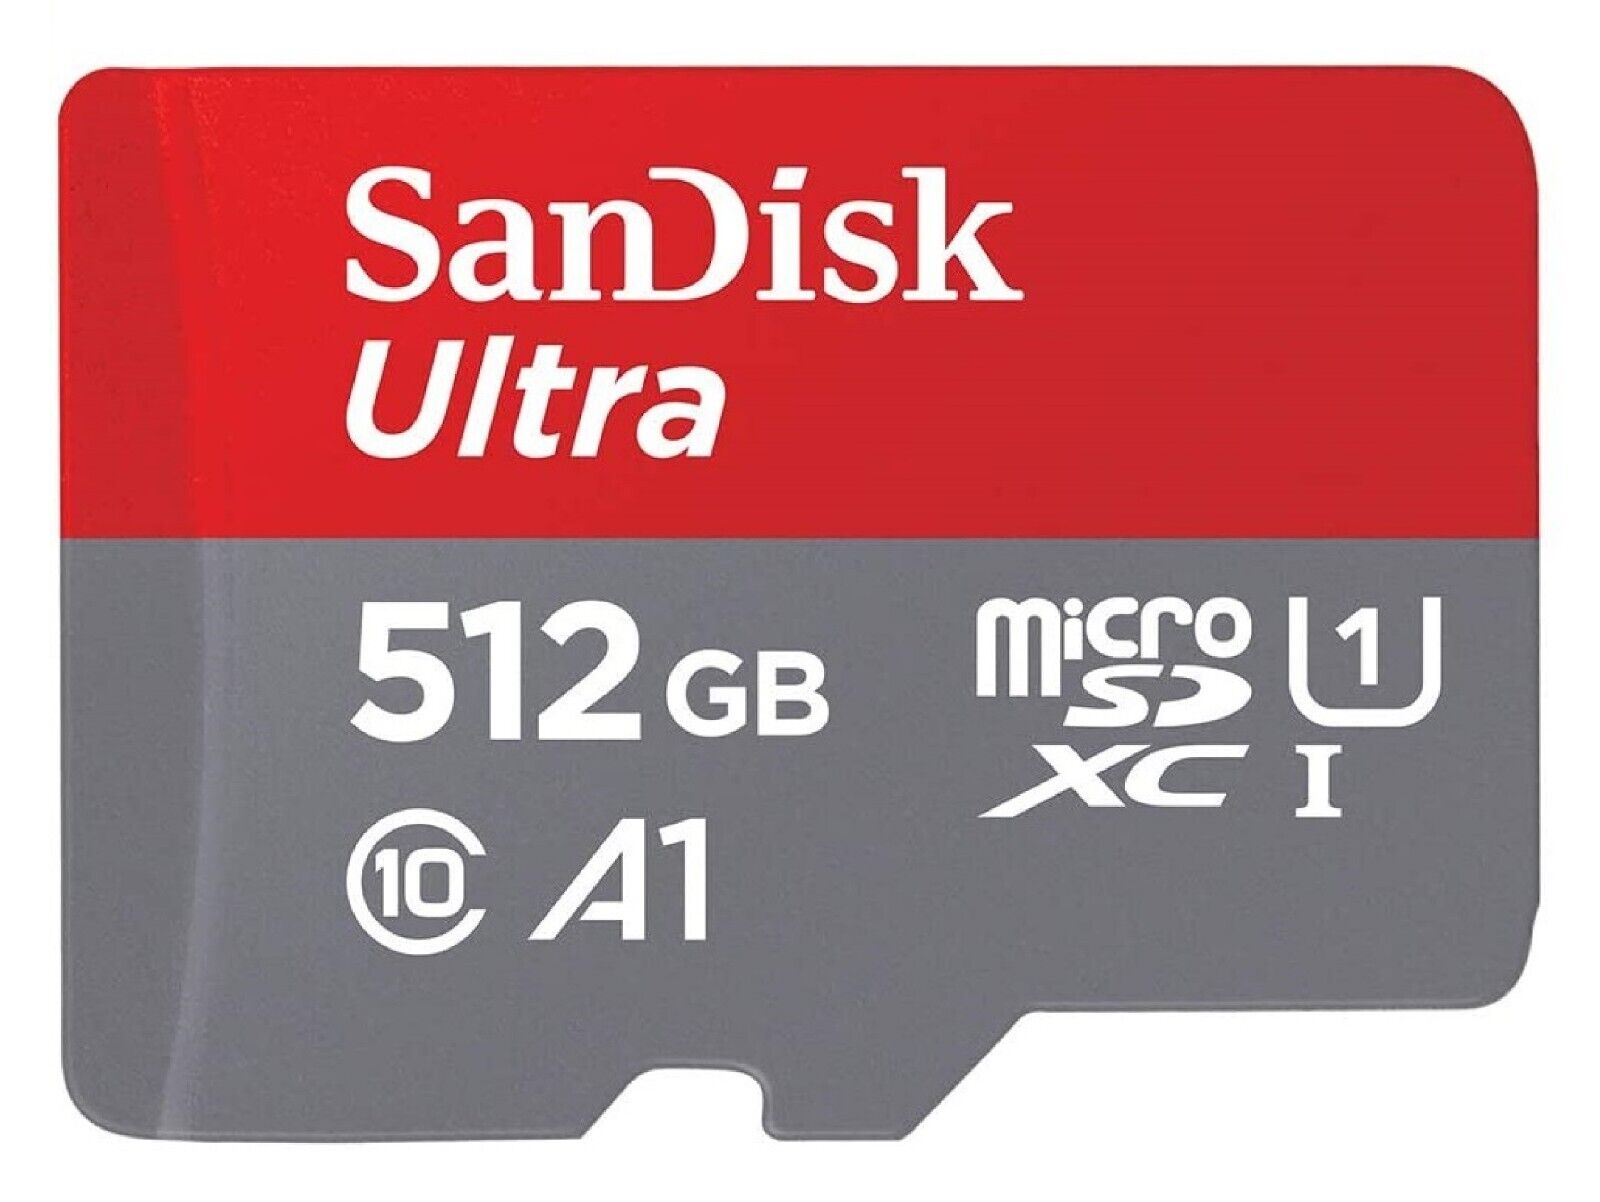 SANDISK 512GB ULTRA MICROSD - CLASS 10